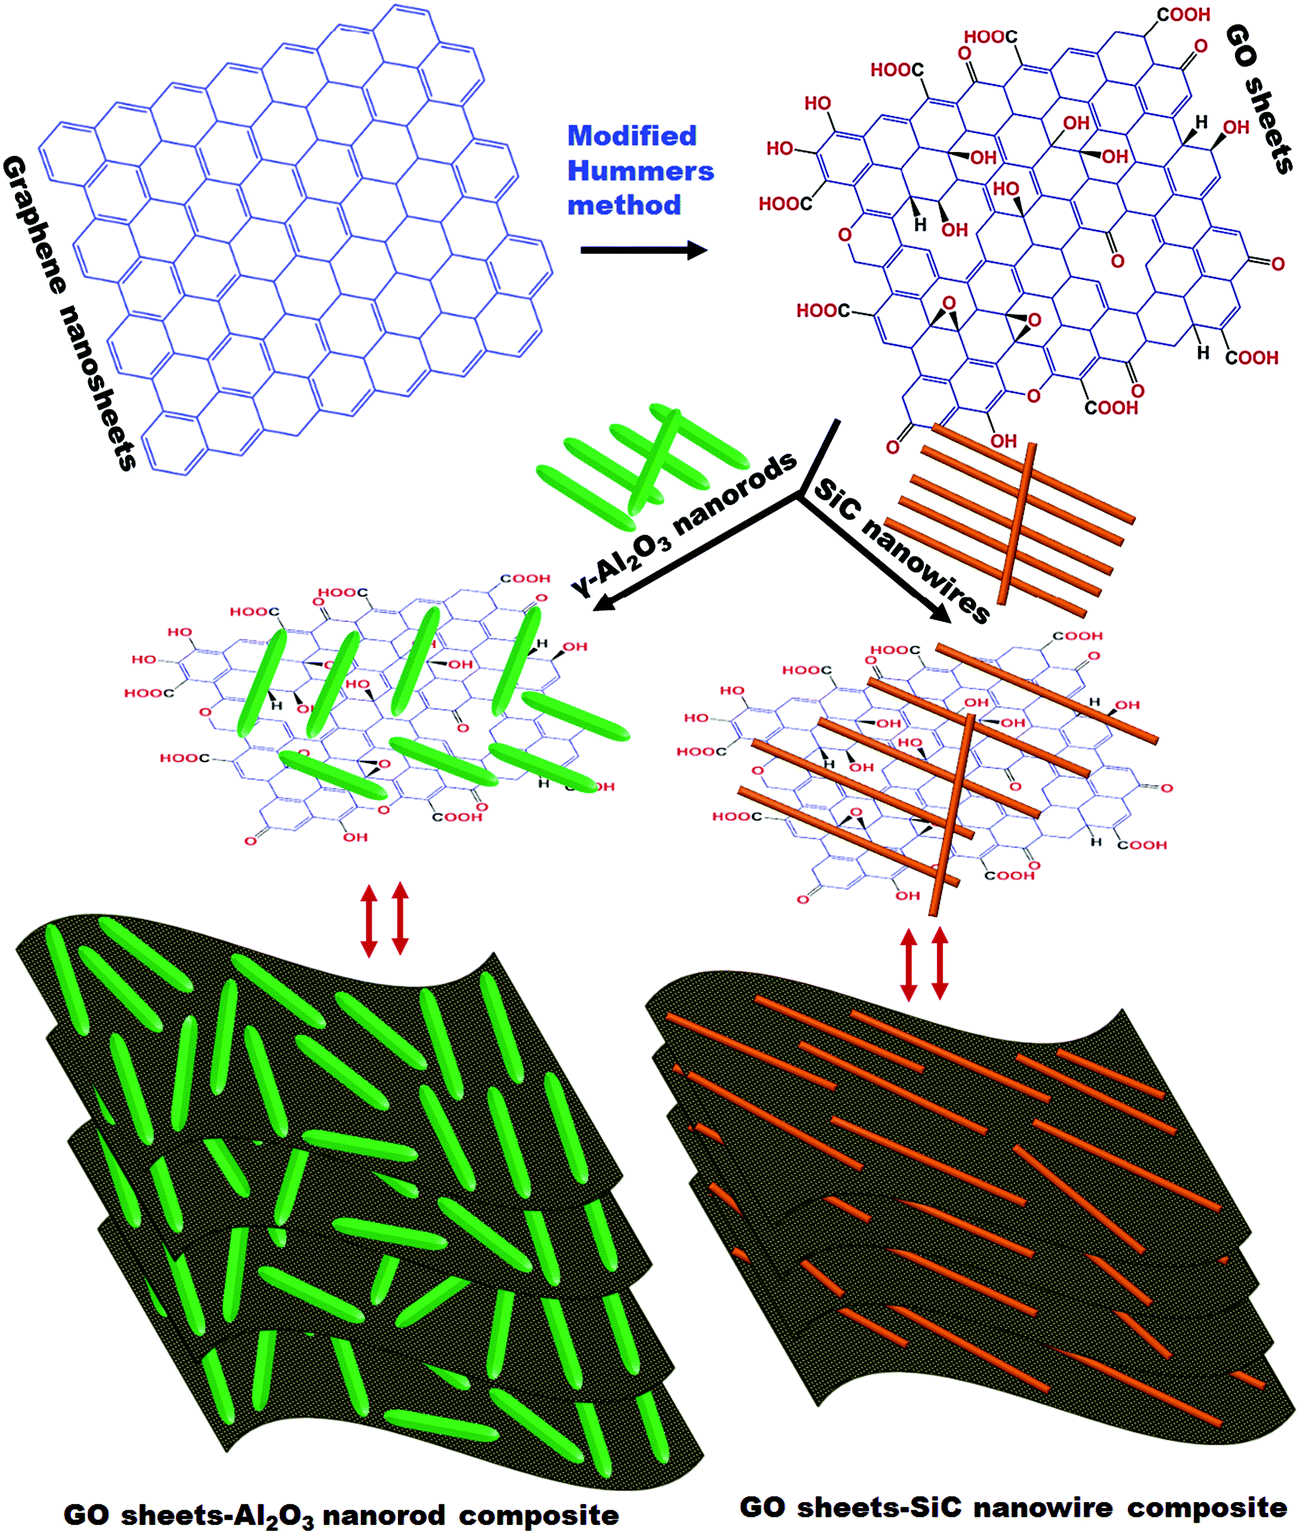 Progress In Biomimetic Leverages For Marine Antifouling Using Nanocomposite Coatings Journal Of Materials Chemistry B Rsc Publishing Doi 10 1039 C9tba